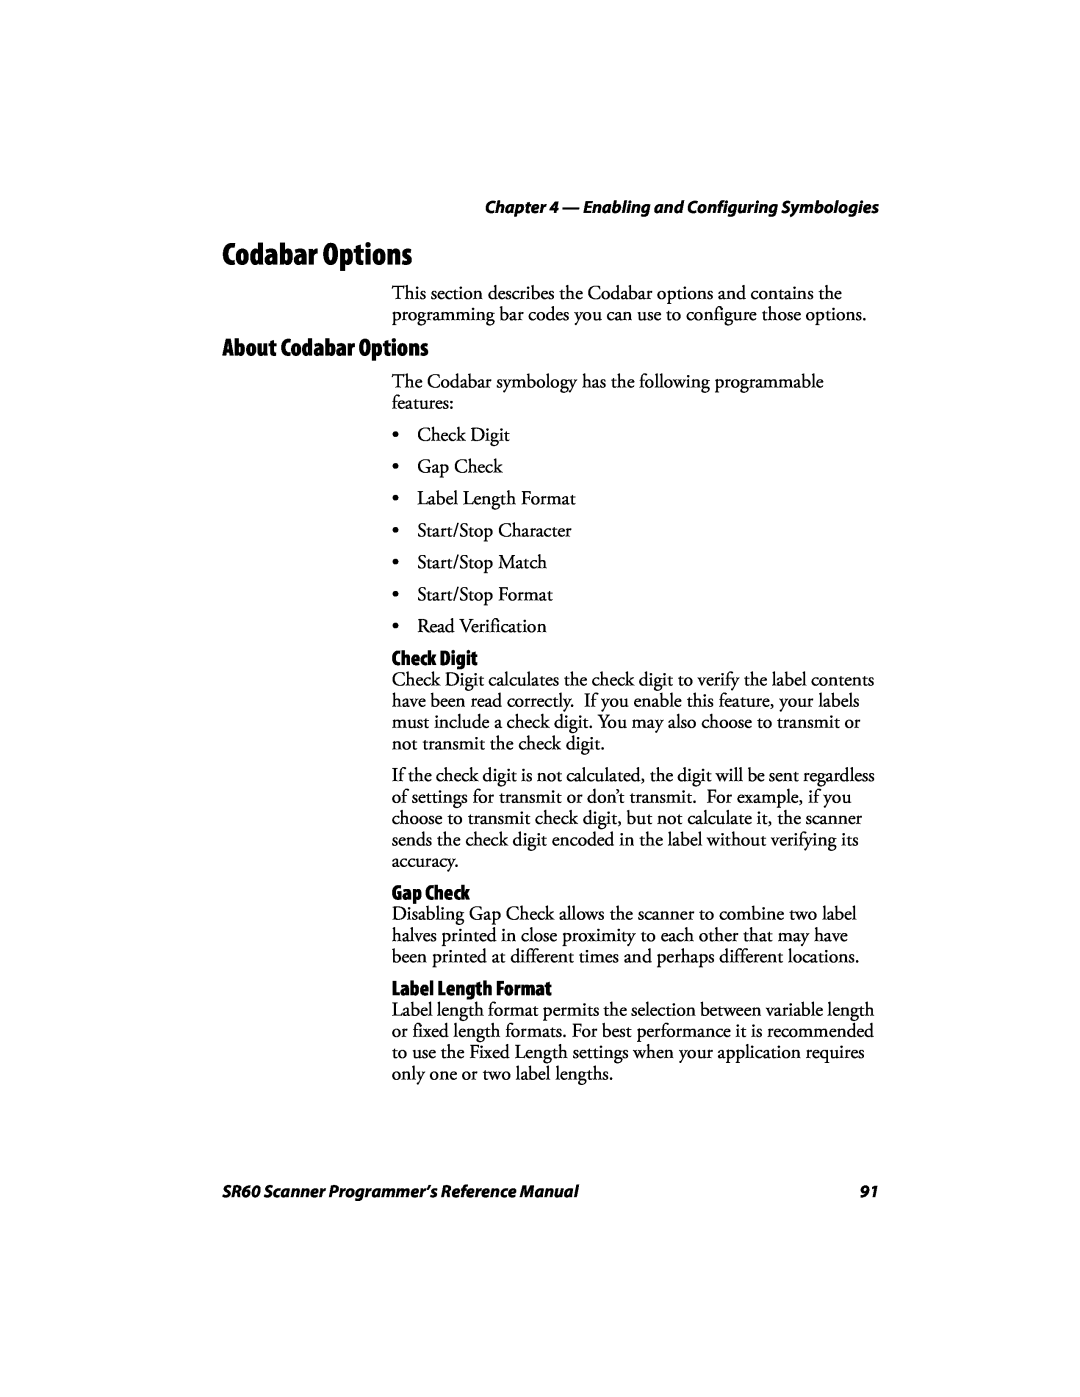 Intermec SR60 manual About Codabar Options, Gap Check, Check Digit, Label Length Format 